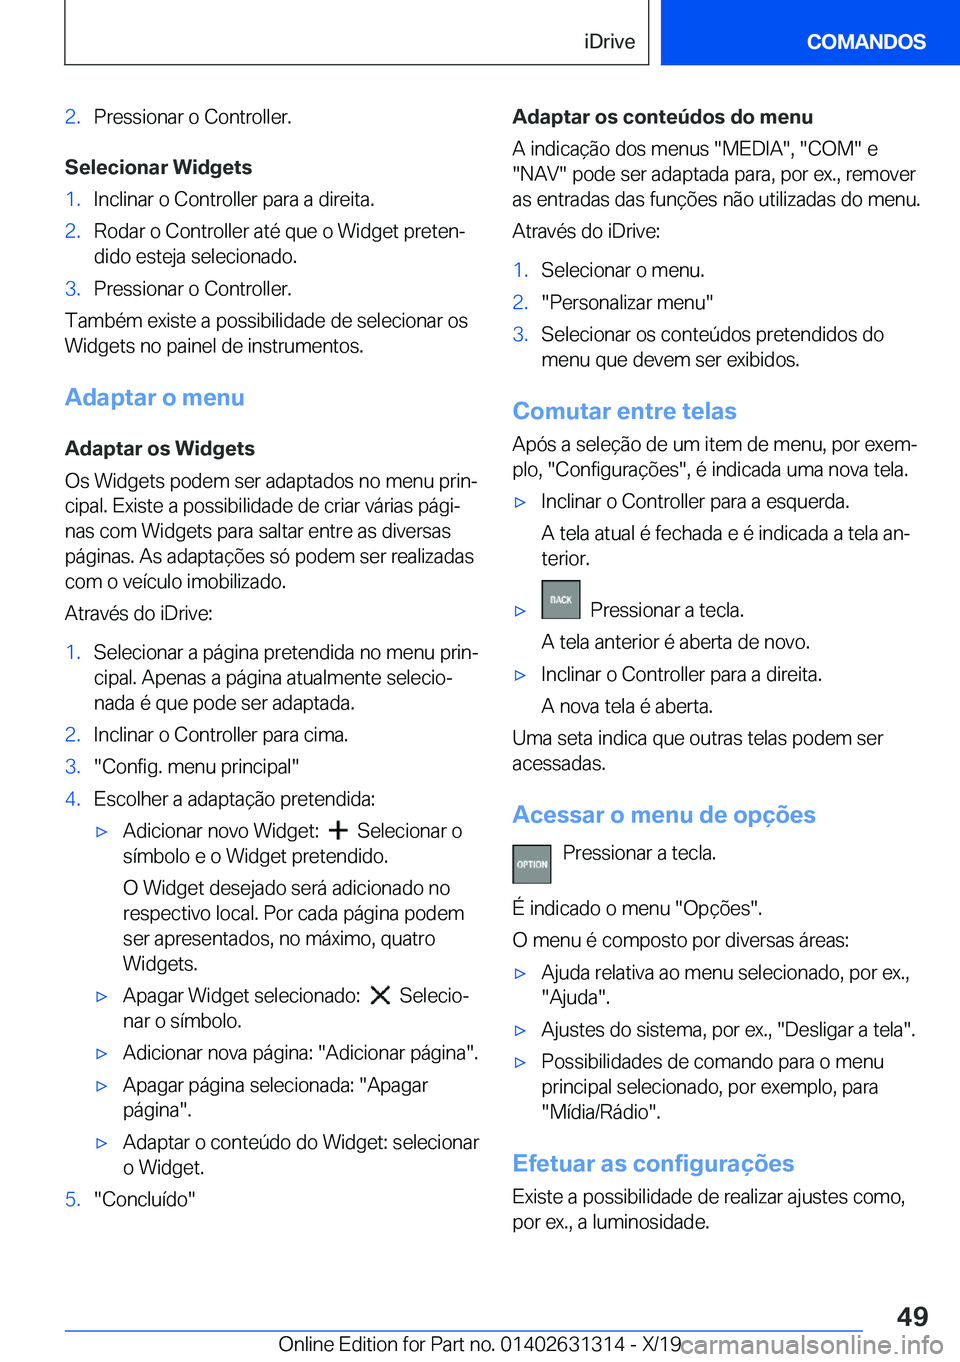 BMW M8 2020  Manual do condutor (in Portuguese) �2�.�P�r�e�s�s�i�o�n�a�r��o��C�o�n�t�r�o�l�l�e�r�.
�S�e�l�e�c�i�o�n�a�r��W�i�d�g�e�t�s
�1�.�I�n�c�l�i�n�a�r��o��C�o�n�t�r�o�l�l�e�r��p�a�r�a��a��d�i�r�e�i�t�a�.�2�.�R�o�d�a�r��o��C�o�n�t�r�o